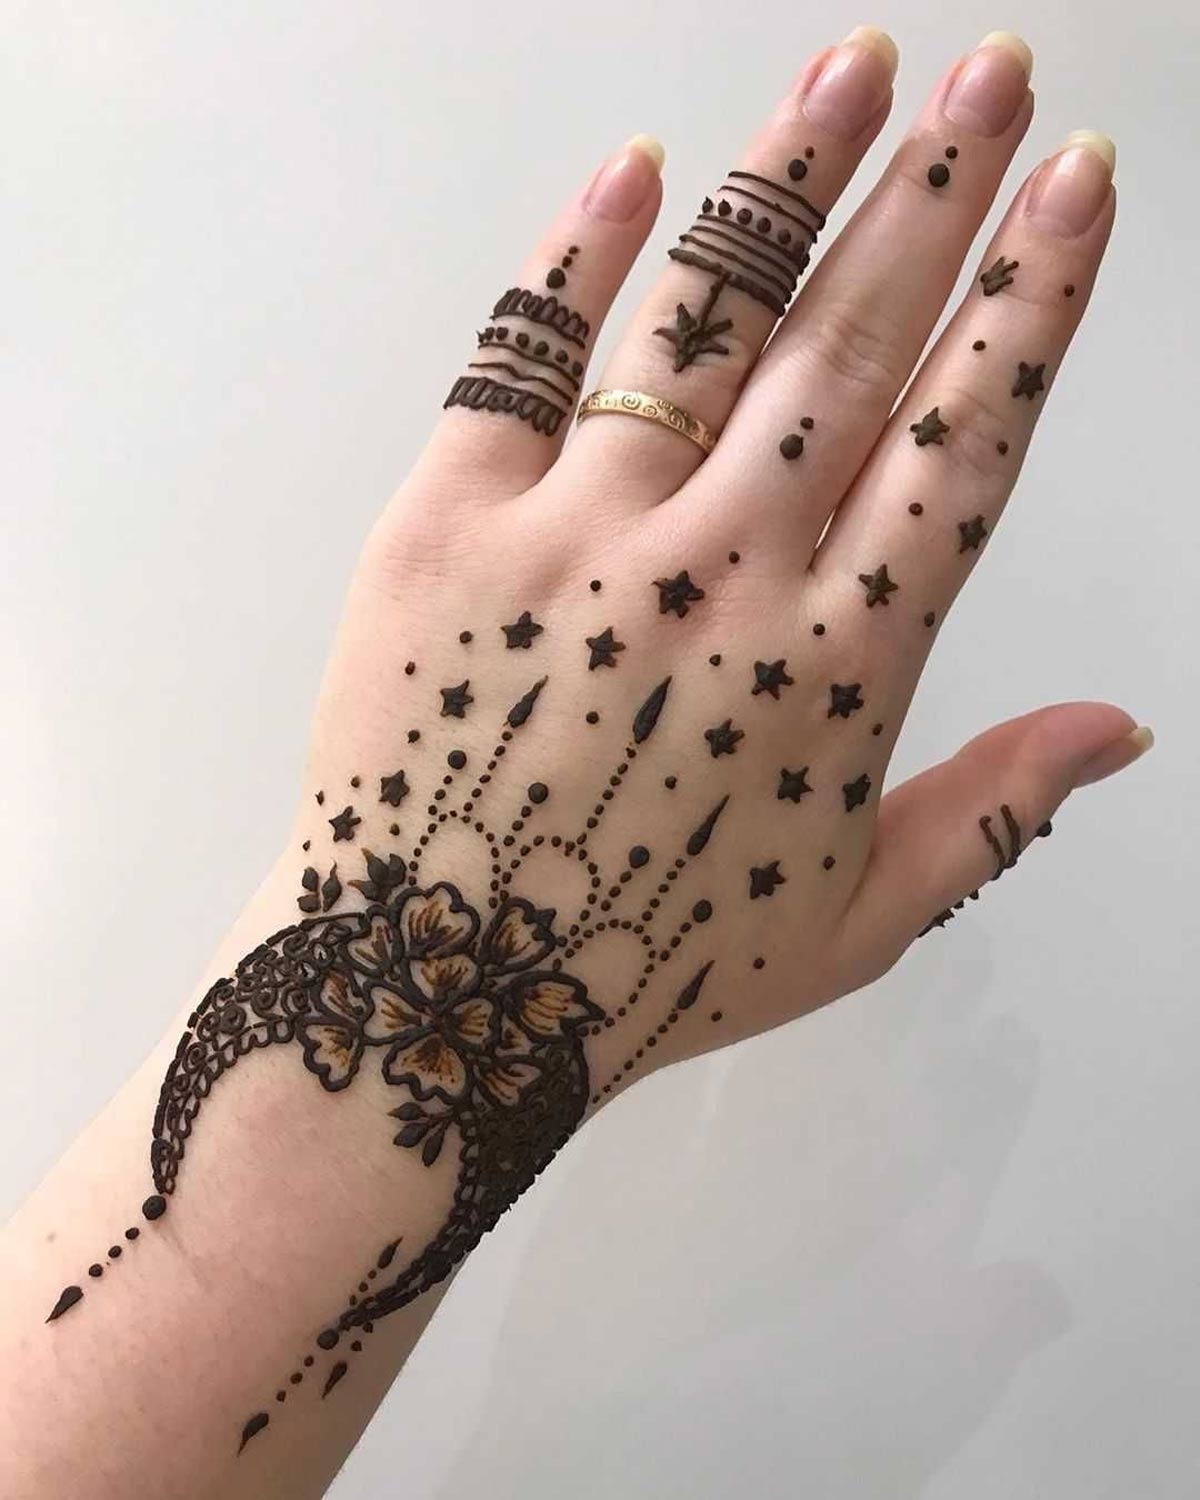 Красивая хна на руке. Хна на руке. Красивые узоры хной на руке. Хна для рисования мехенди. Хна на руке мехенди.